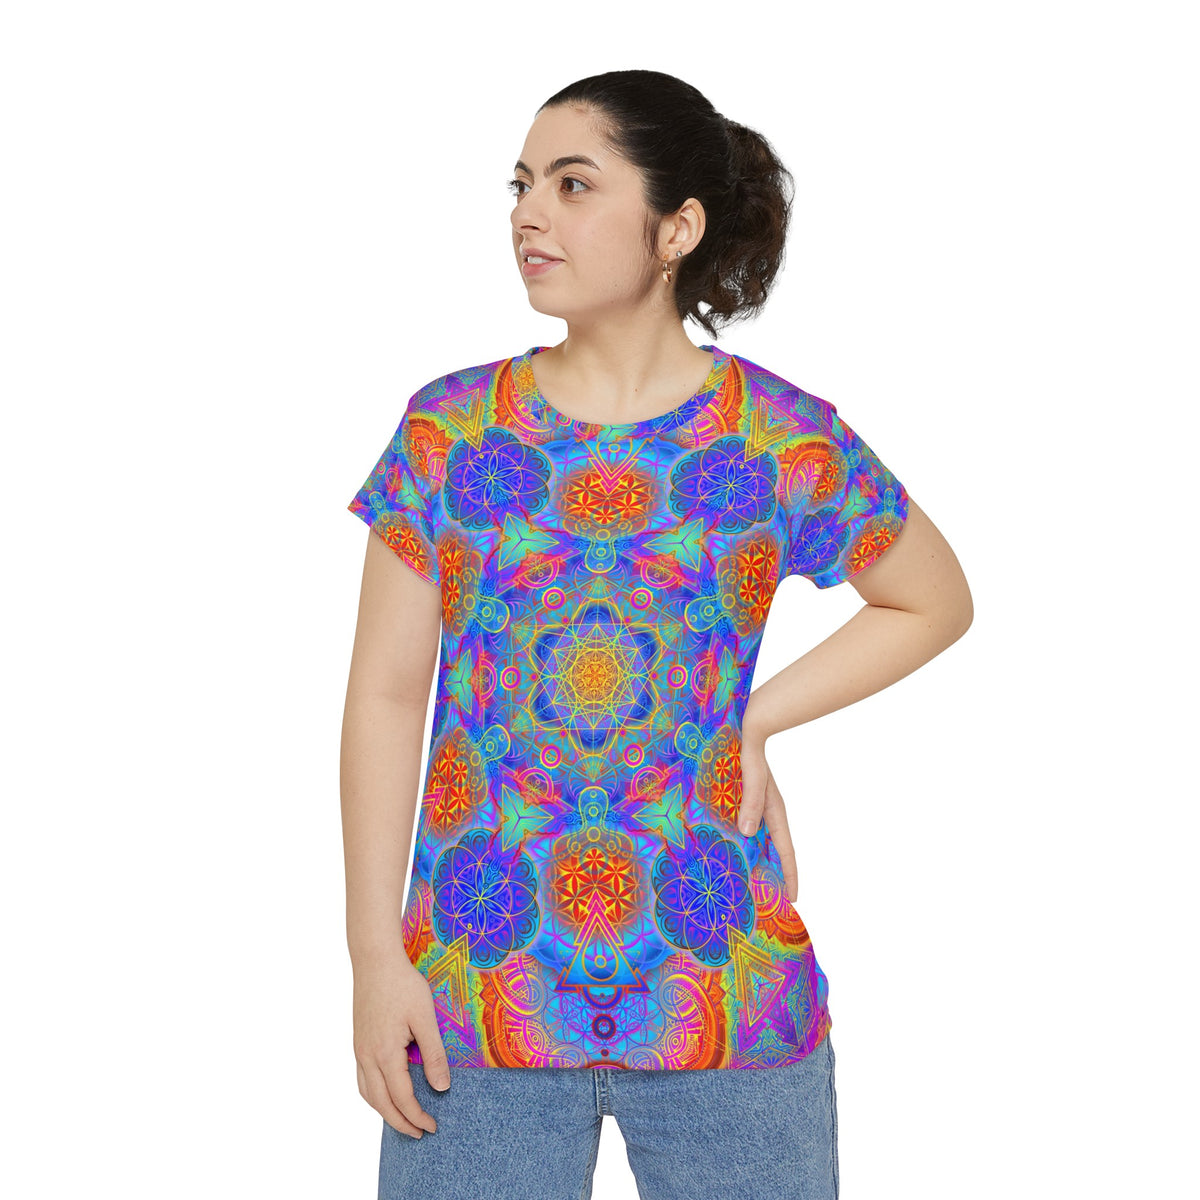 Psychedelic Metatron's Cube Mandala - Women's Short Sleeve Shirt